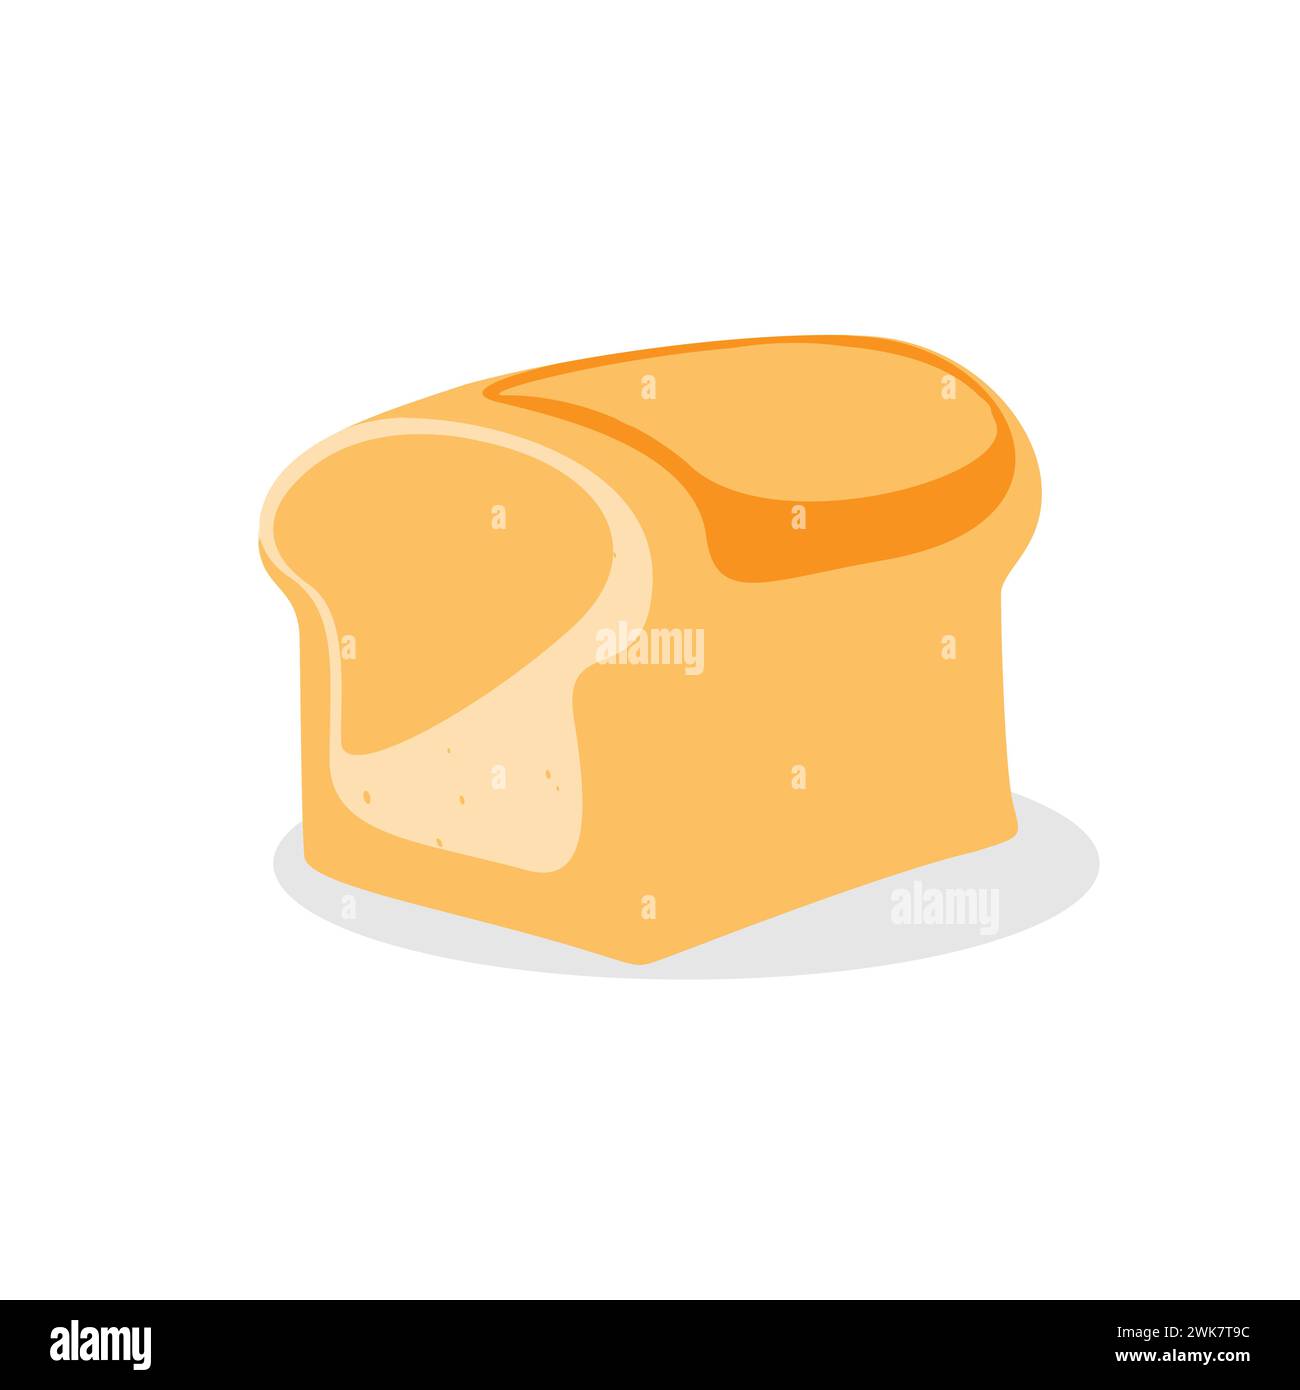 art illustration design concept of toast Stock Vector